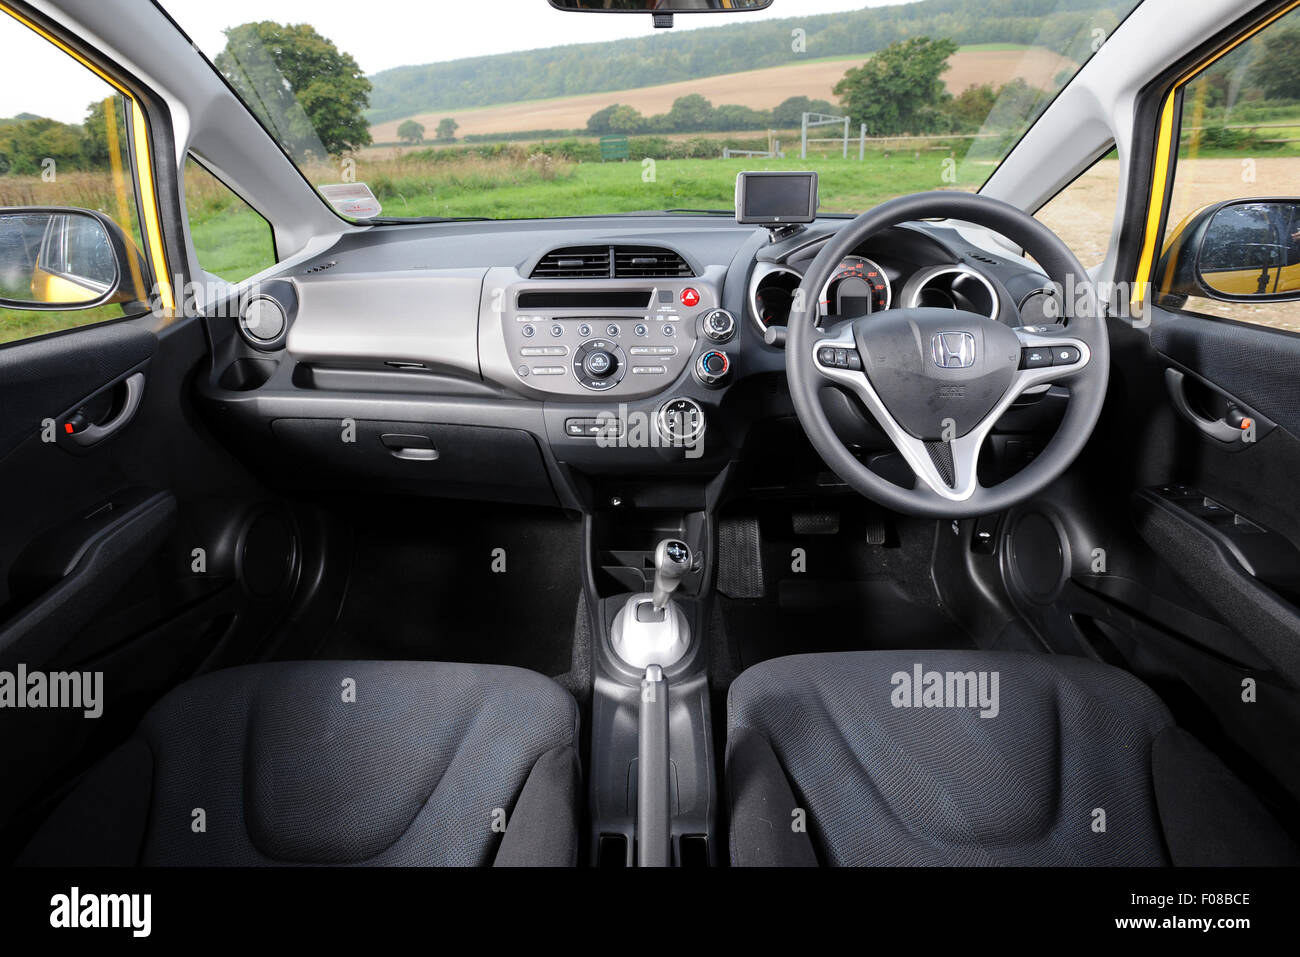 2005 Honda Jazz compact car interior Stock Photo